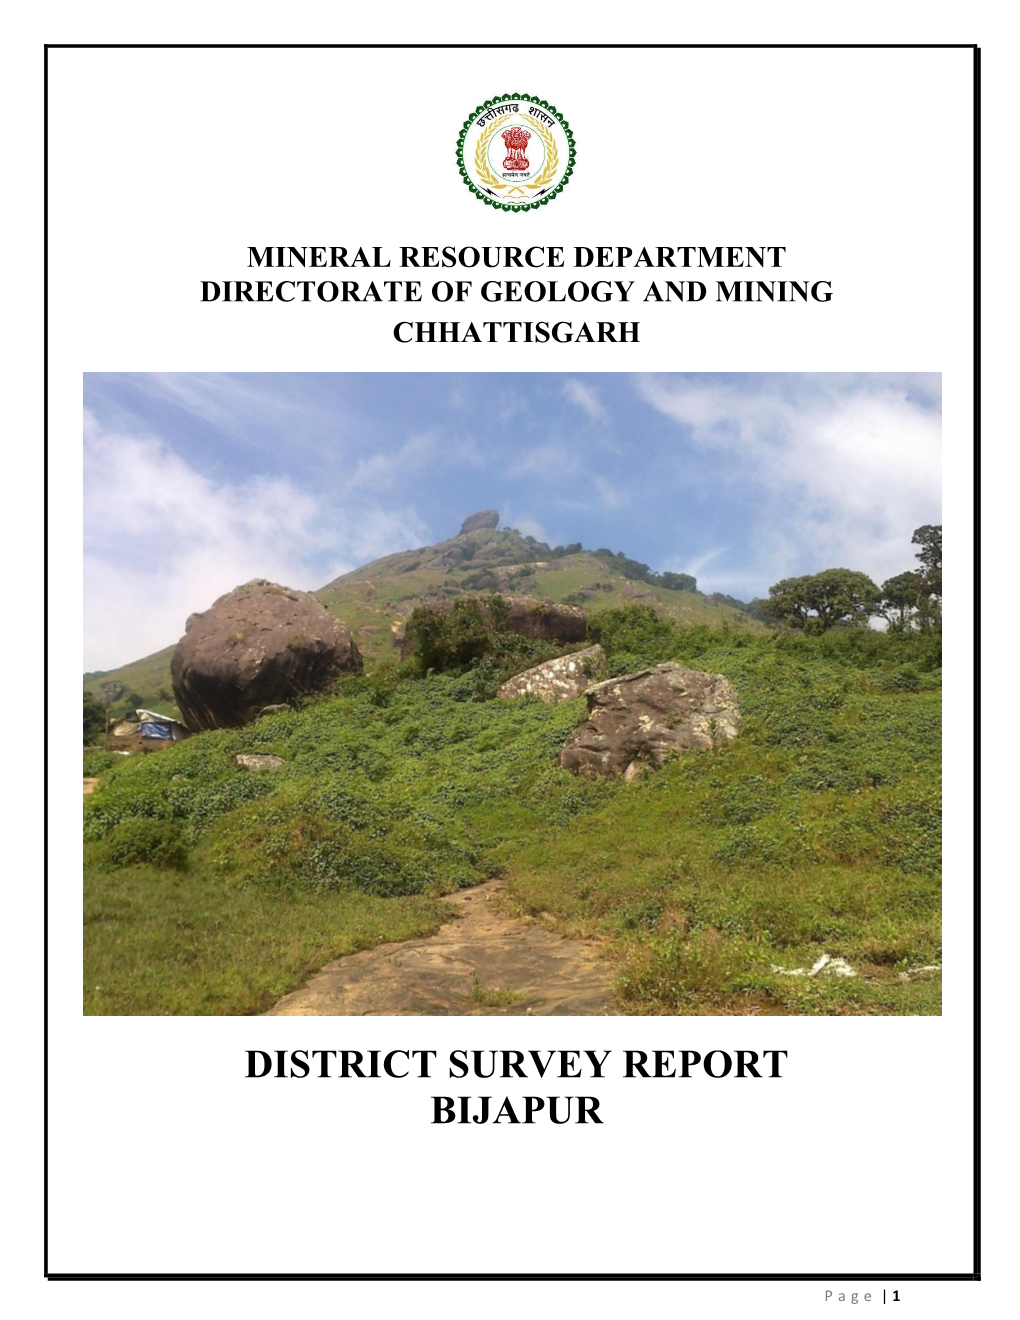 District Survey Report Bijapur